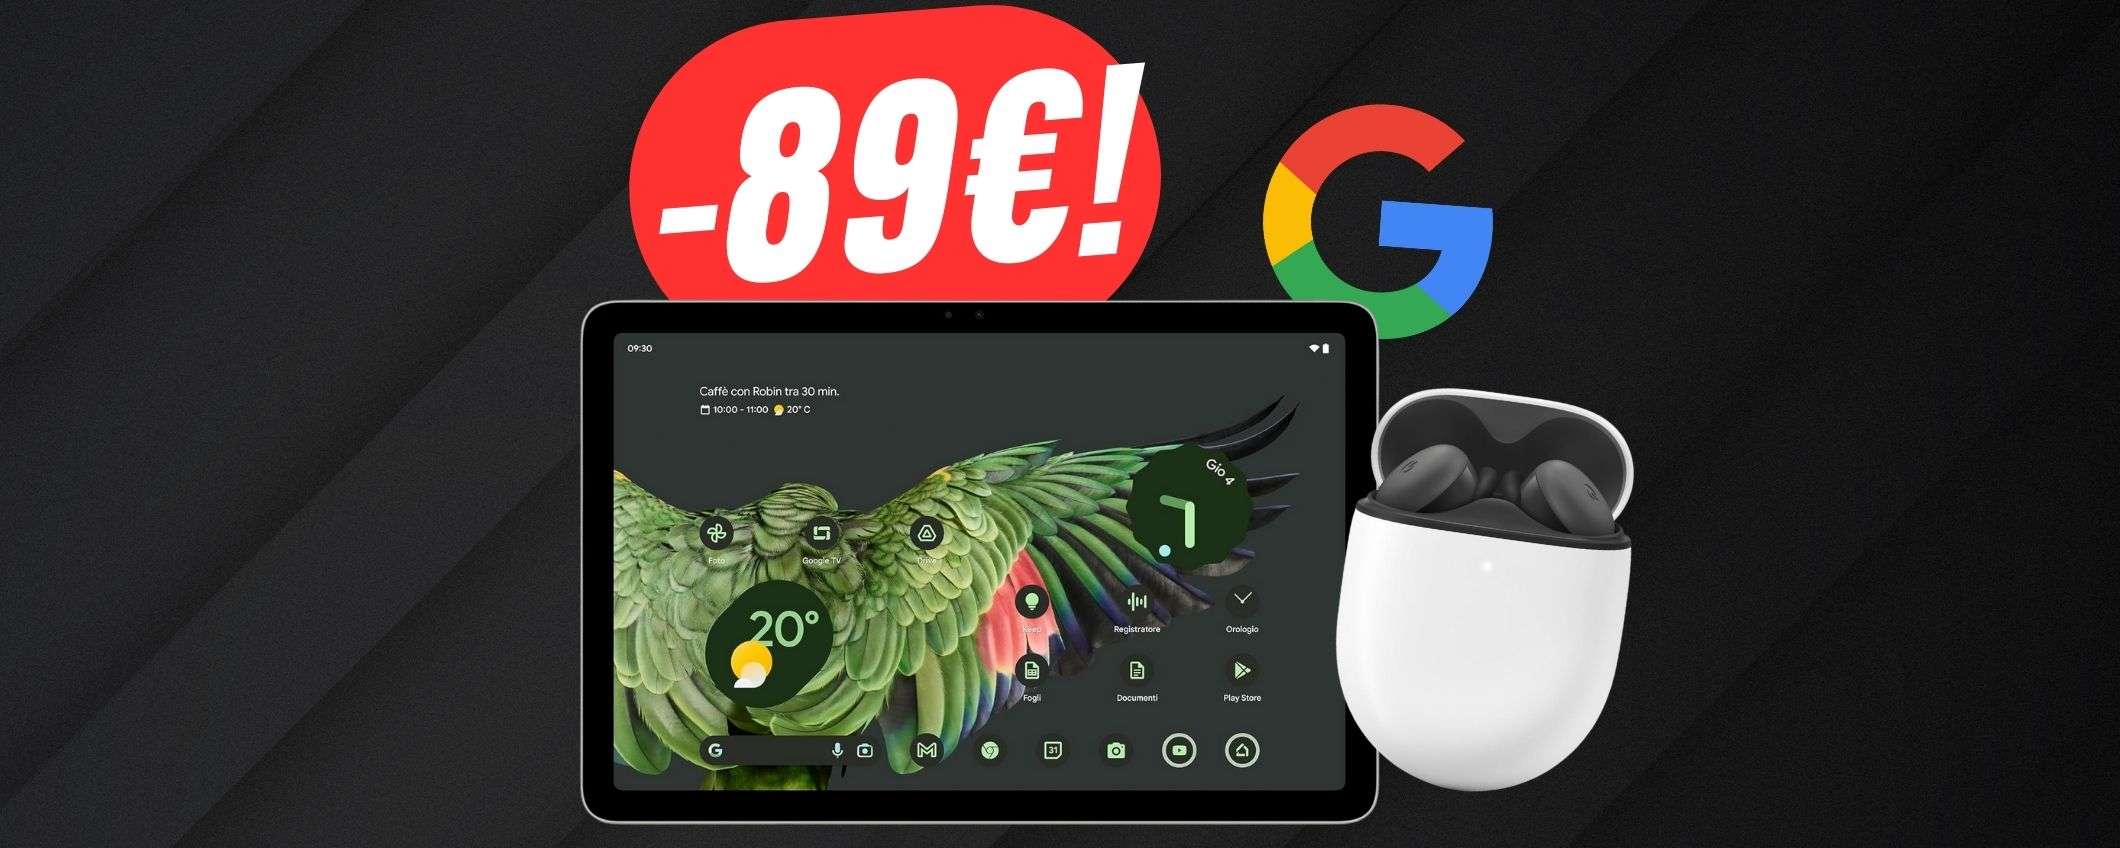 Google Pixel Tablet + Pixel Buds: risparmia -89€ grazie ad Amazon!